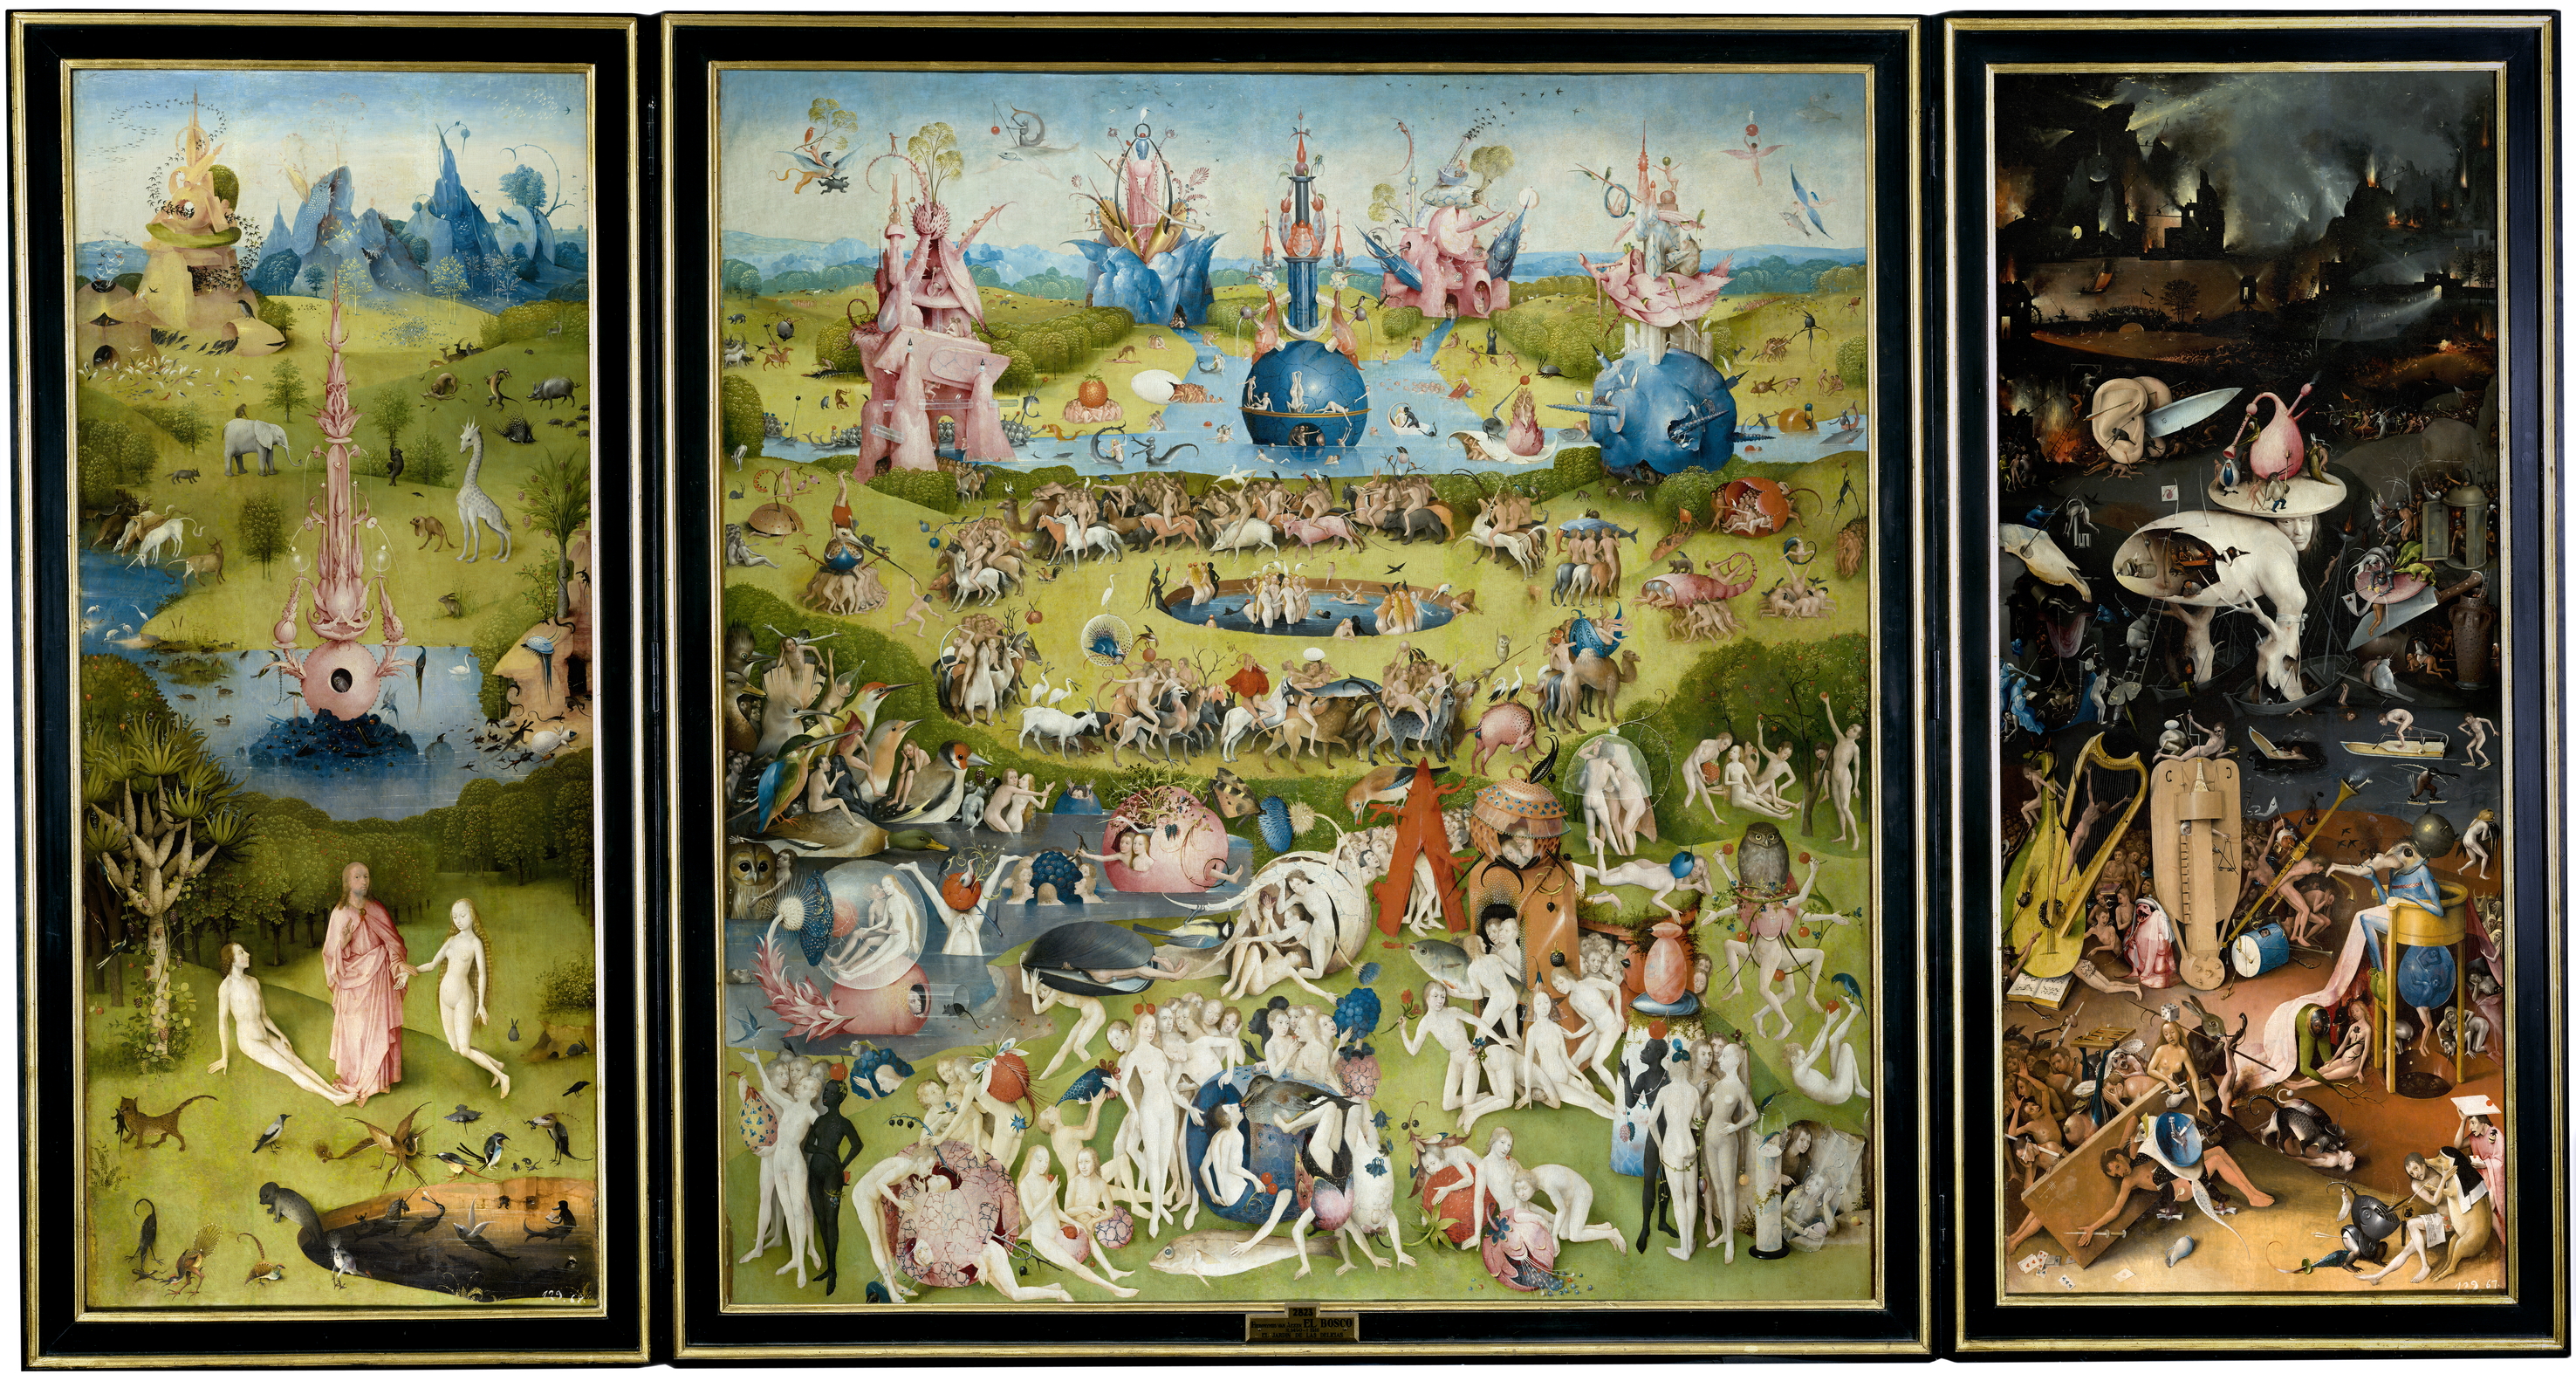 Multimediality of Hieronymous Bosch's Garden of Earthly pleasures